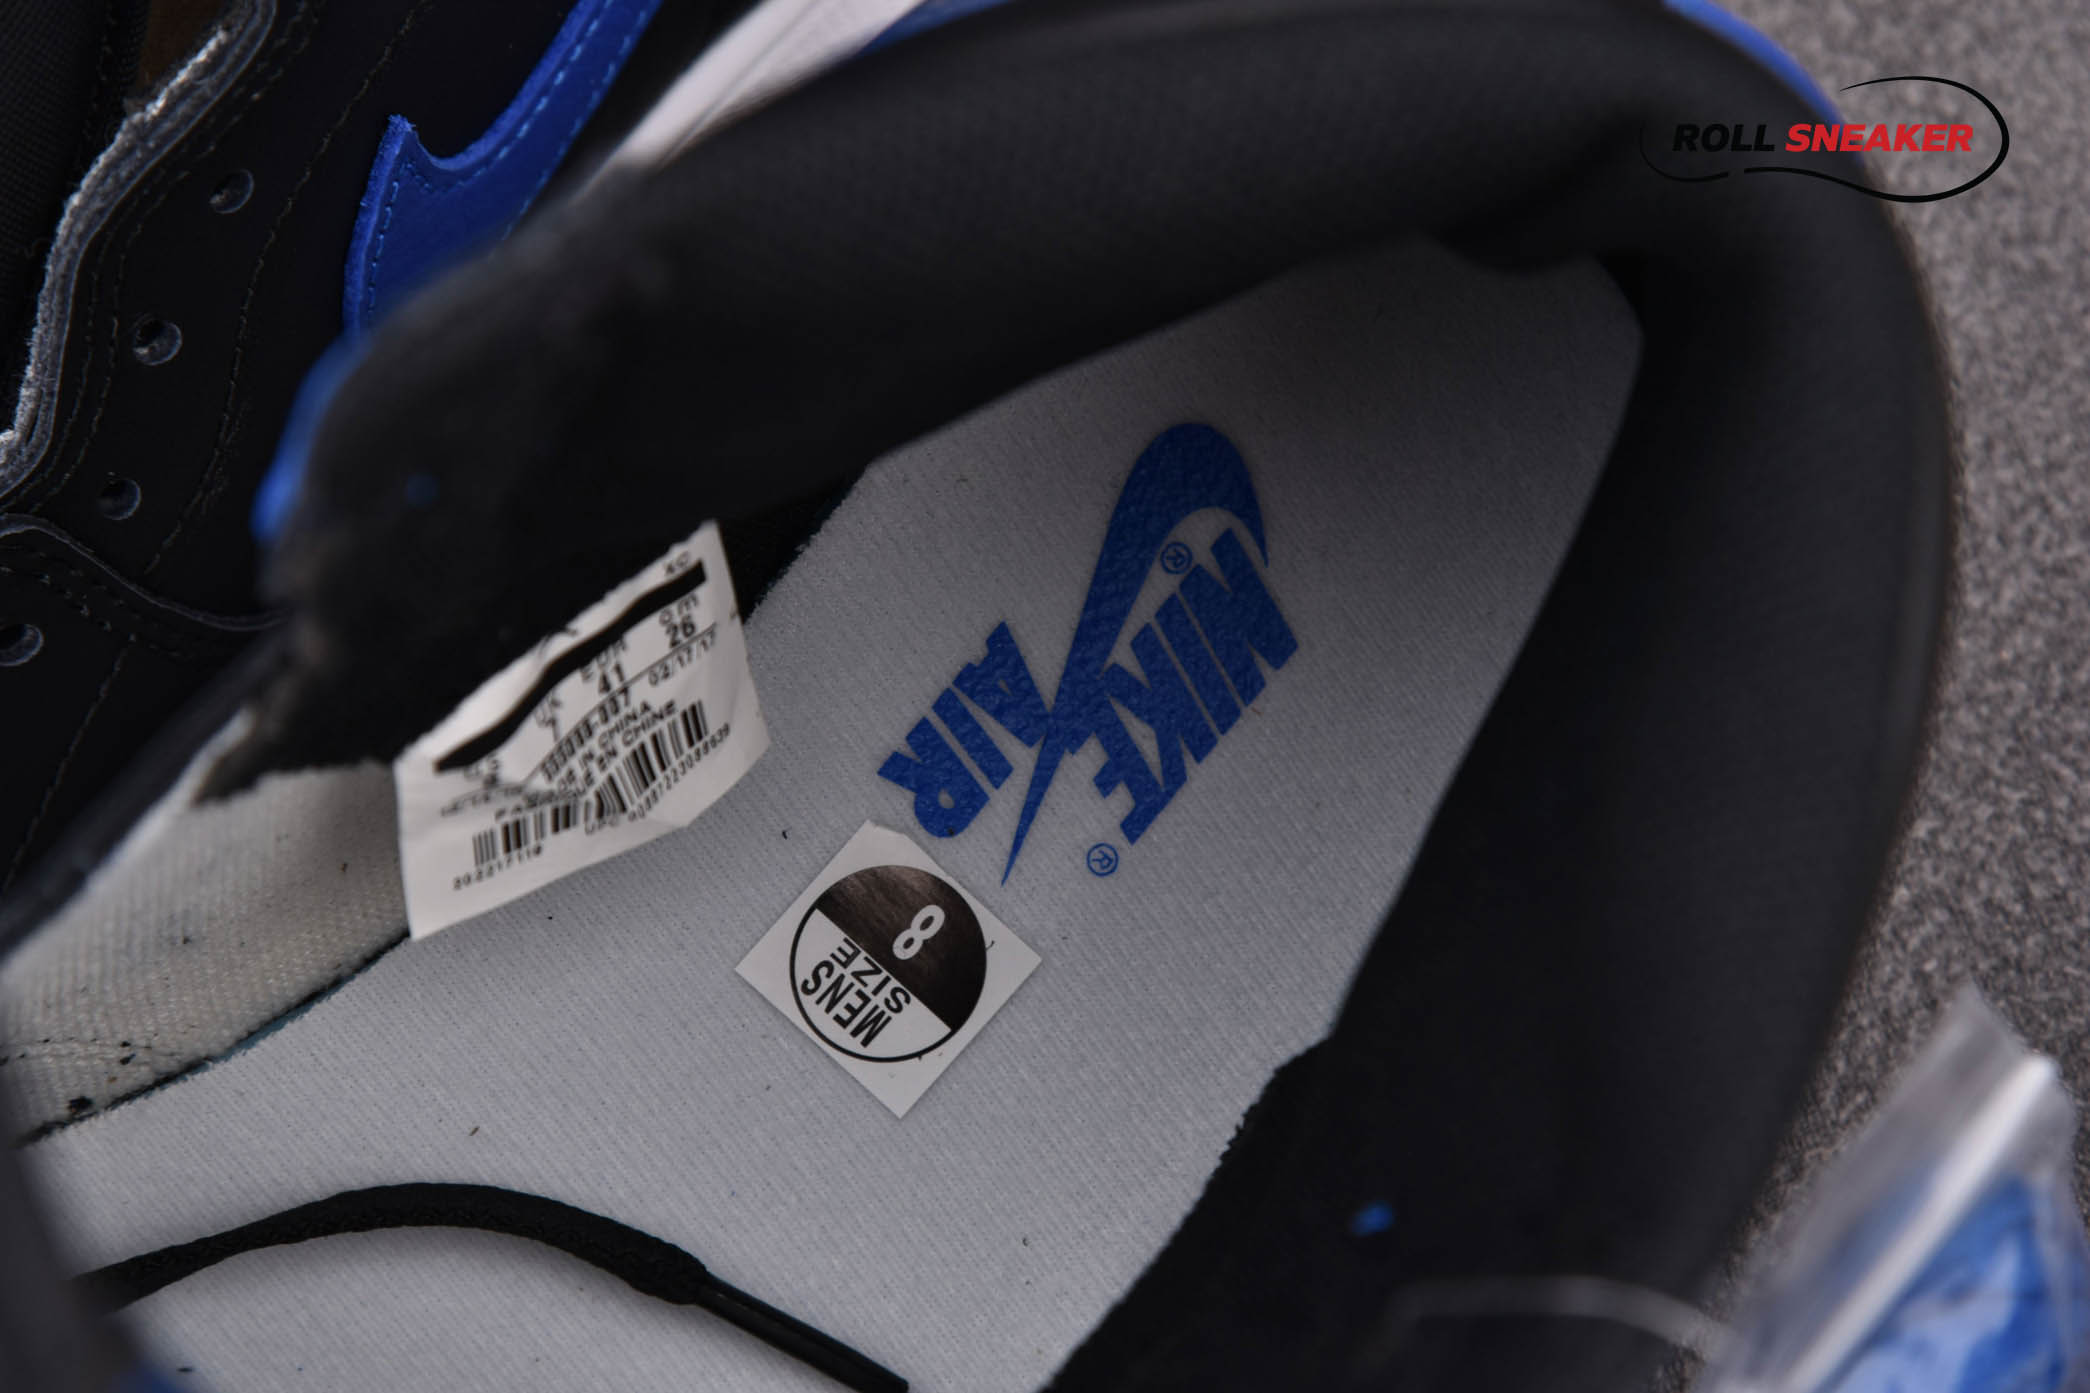 Nike Air Jordan 1 High Og Retro Black Blue